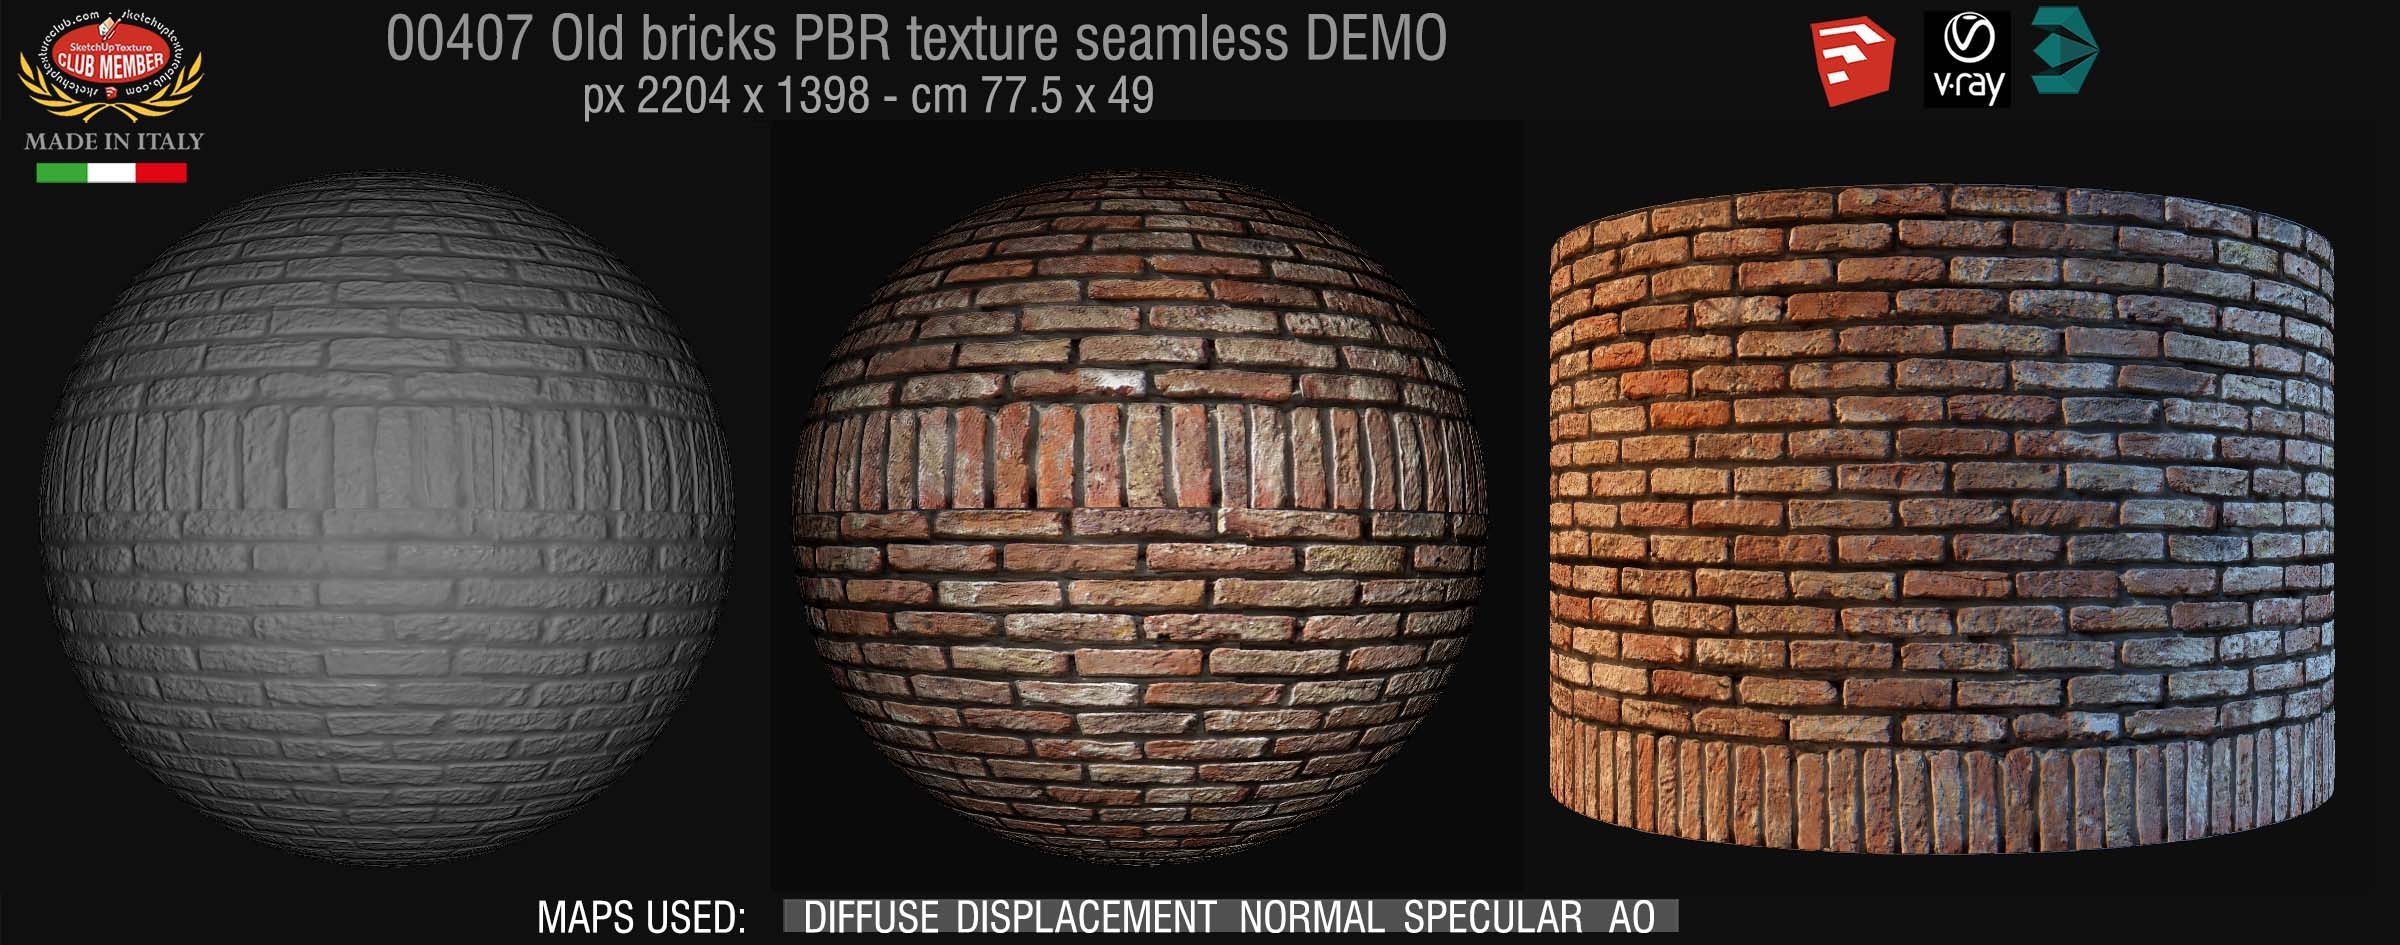 00407 Old bricks PBR texture seamless DEMO